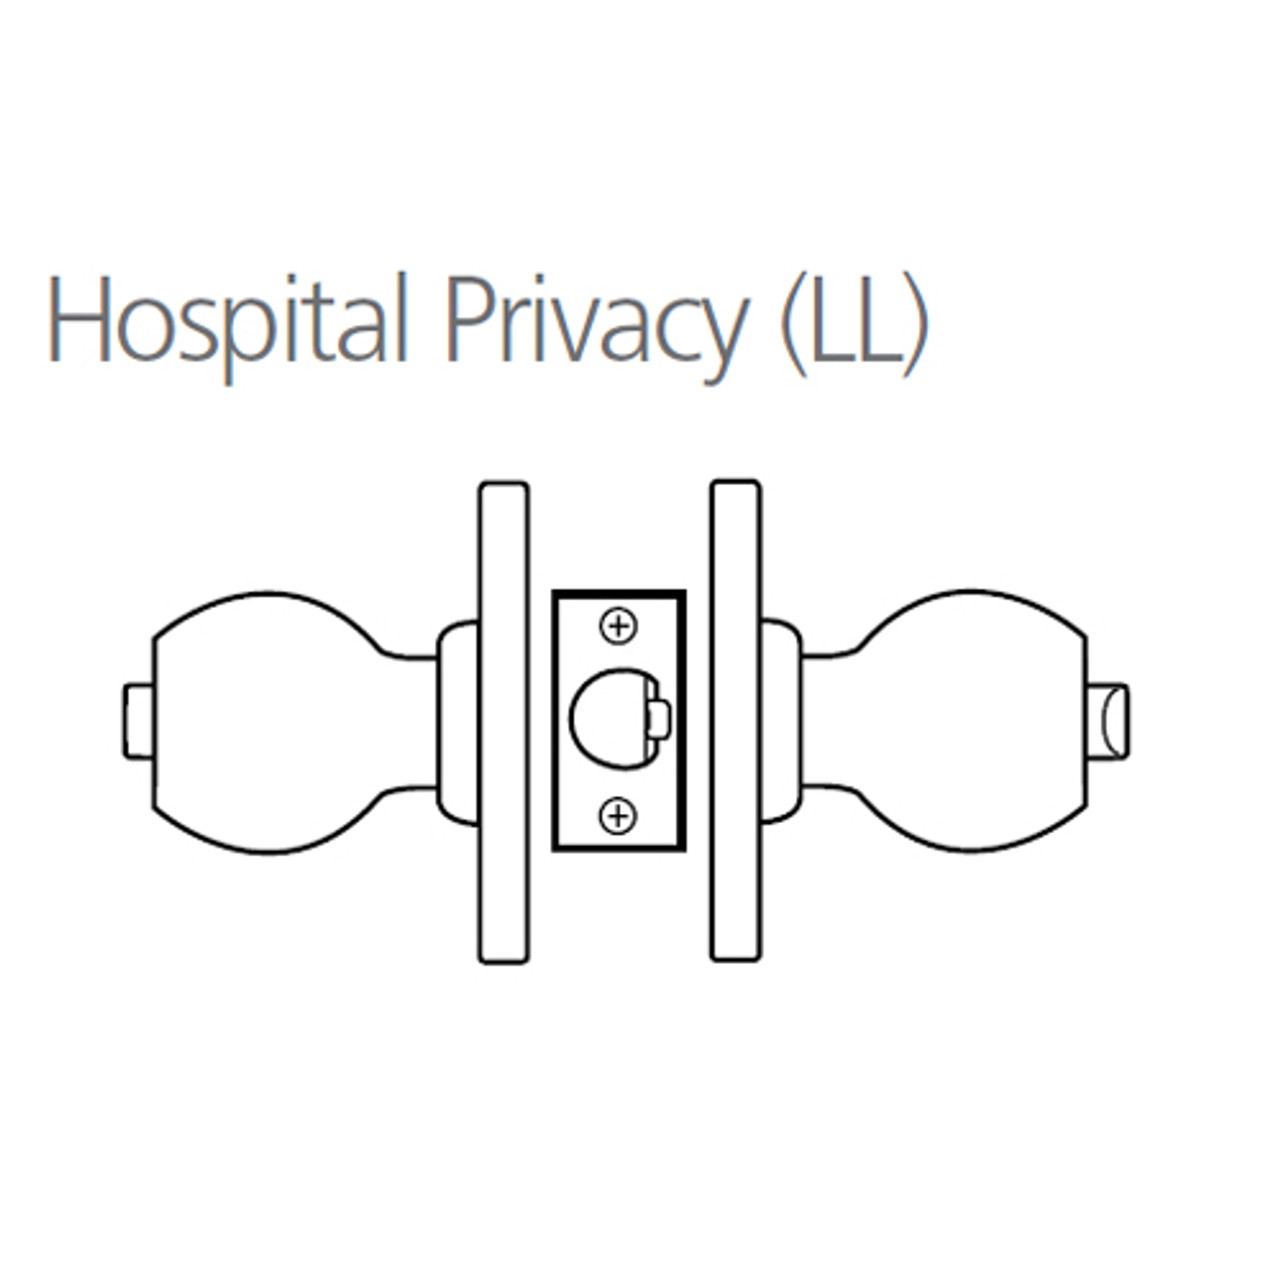 8K30LL6CSTK626 Best 8K Series Hospital Privacy Heavy Duty Cylindrical Knob Locks with Tulip Style in Satin Chrome